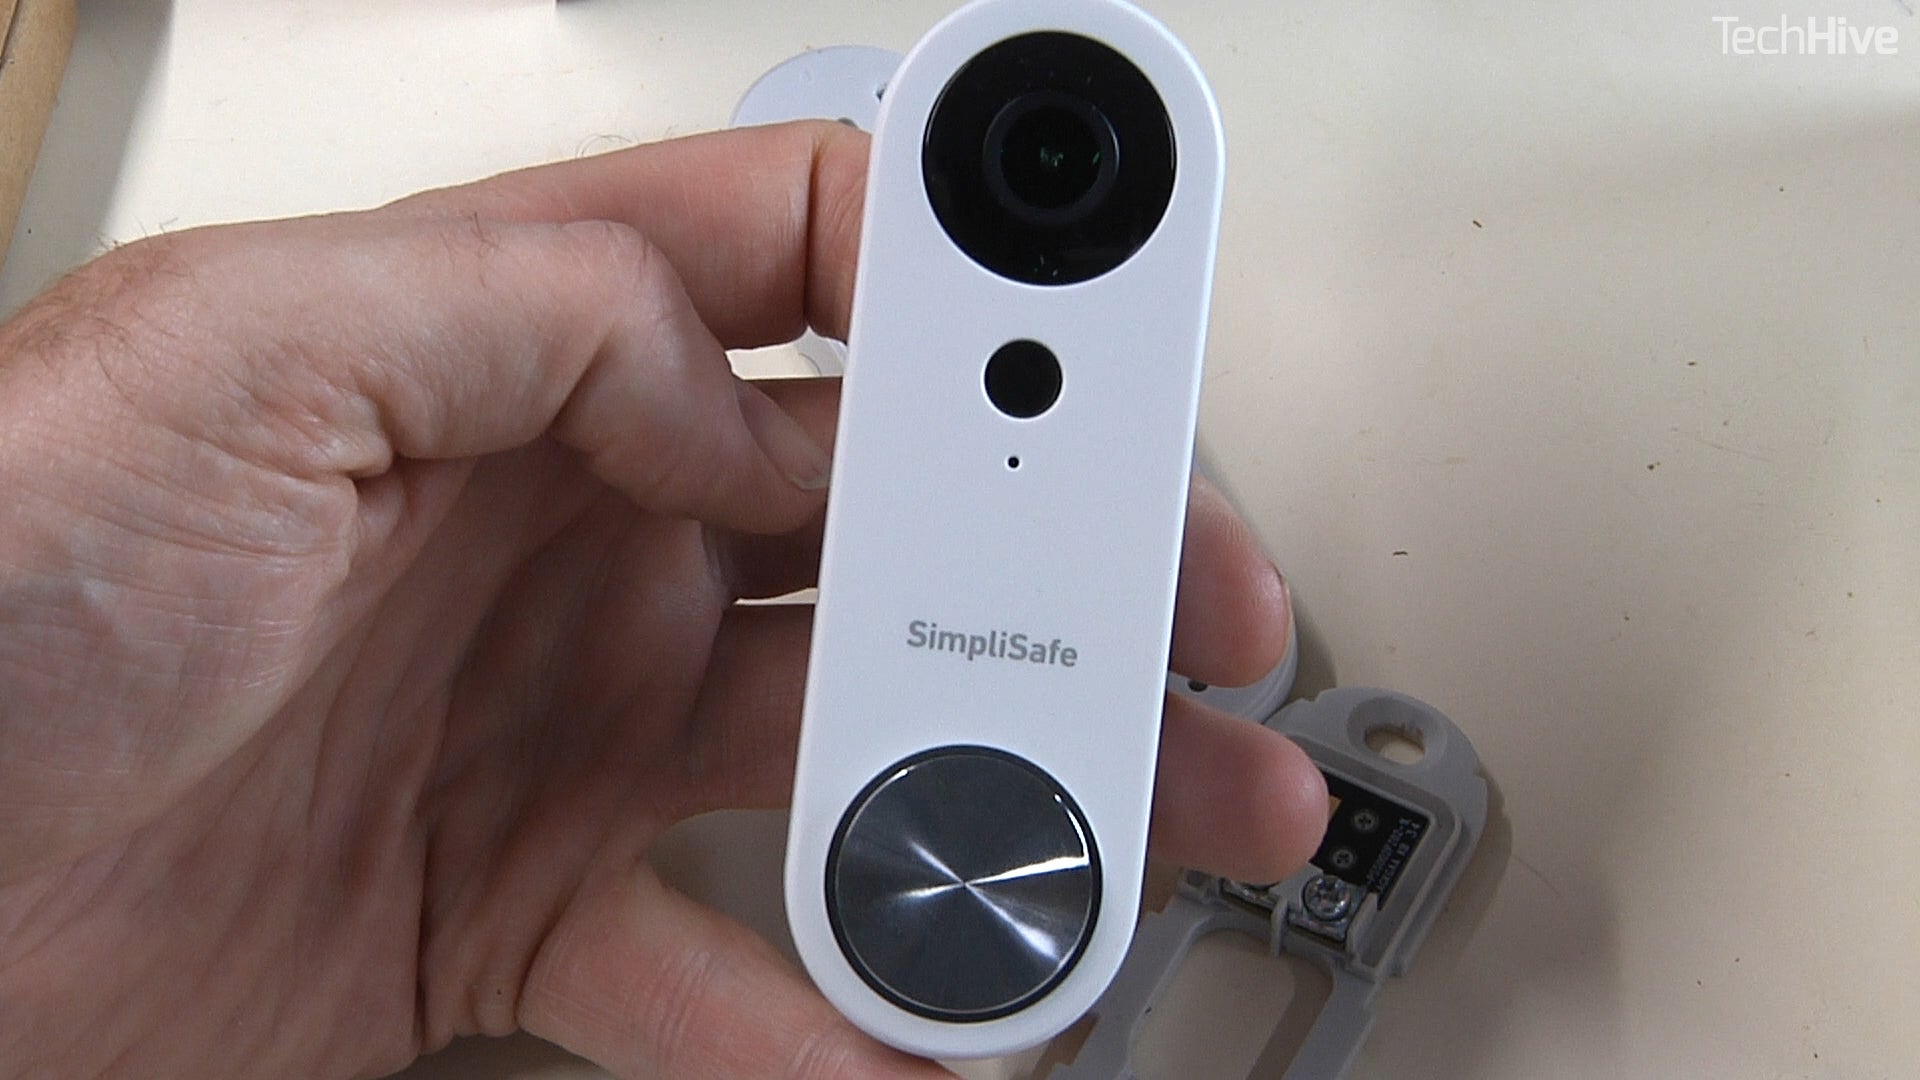 doorbell camera simplisafe